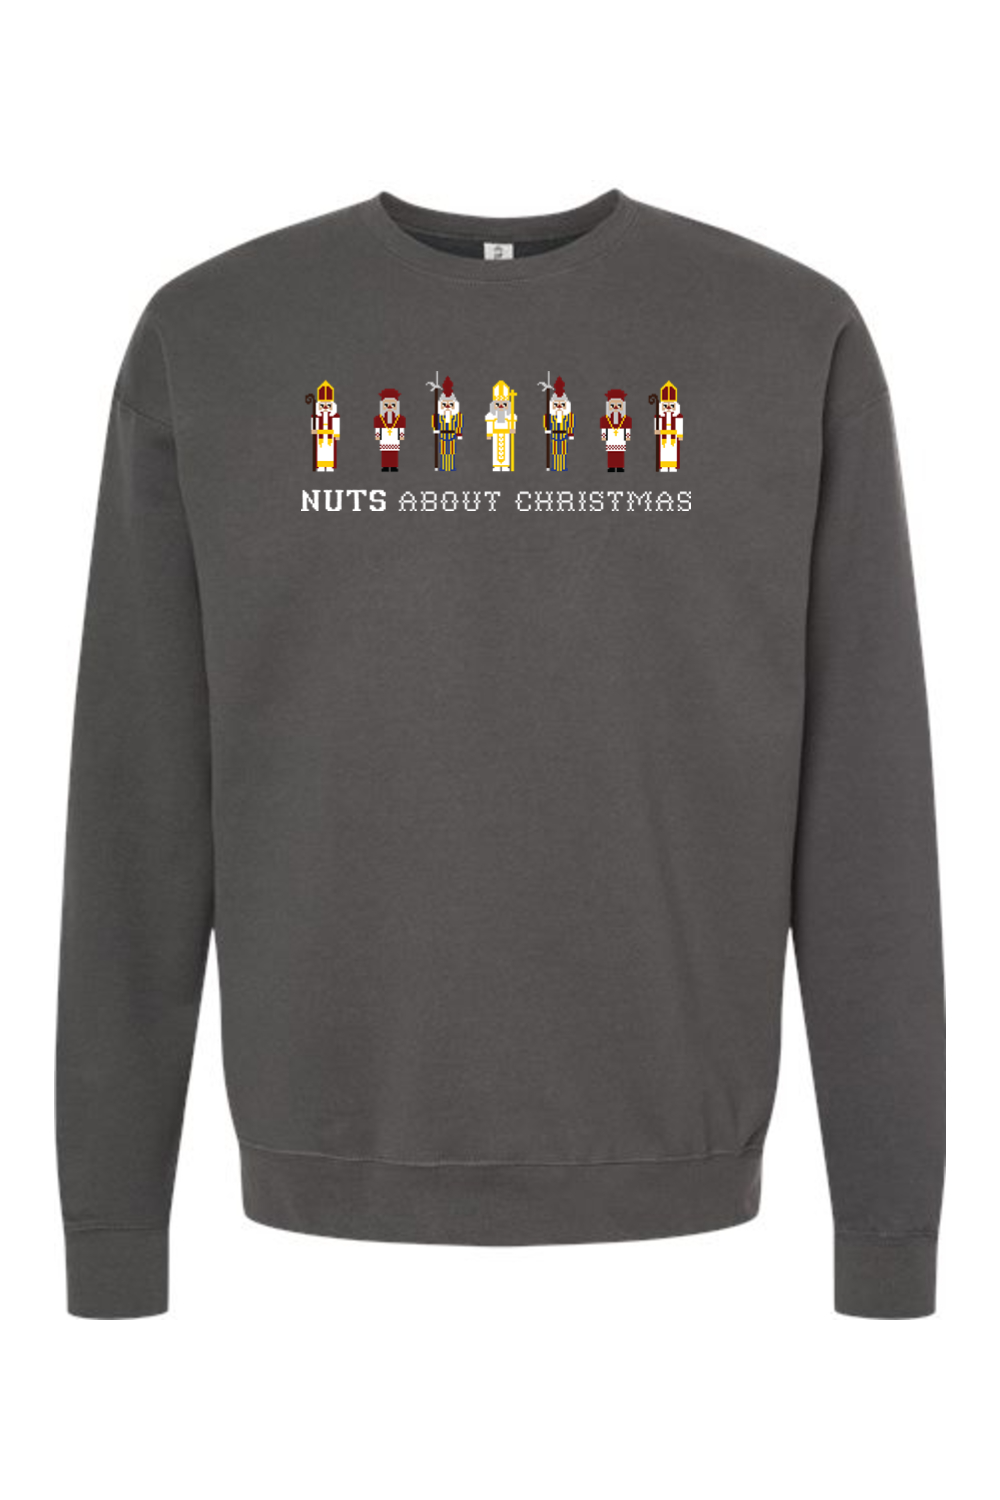 Nuts About Christmas - Crewneck Sweatshirt